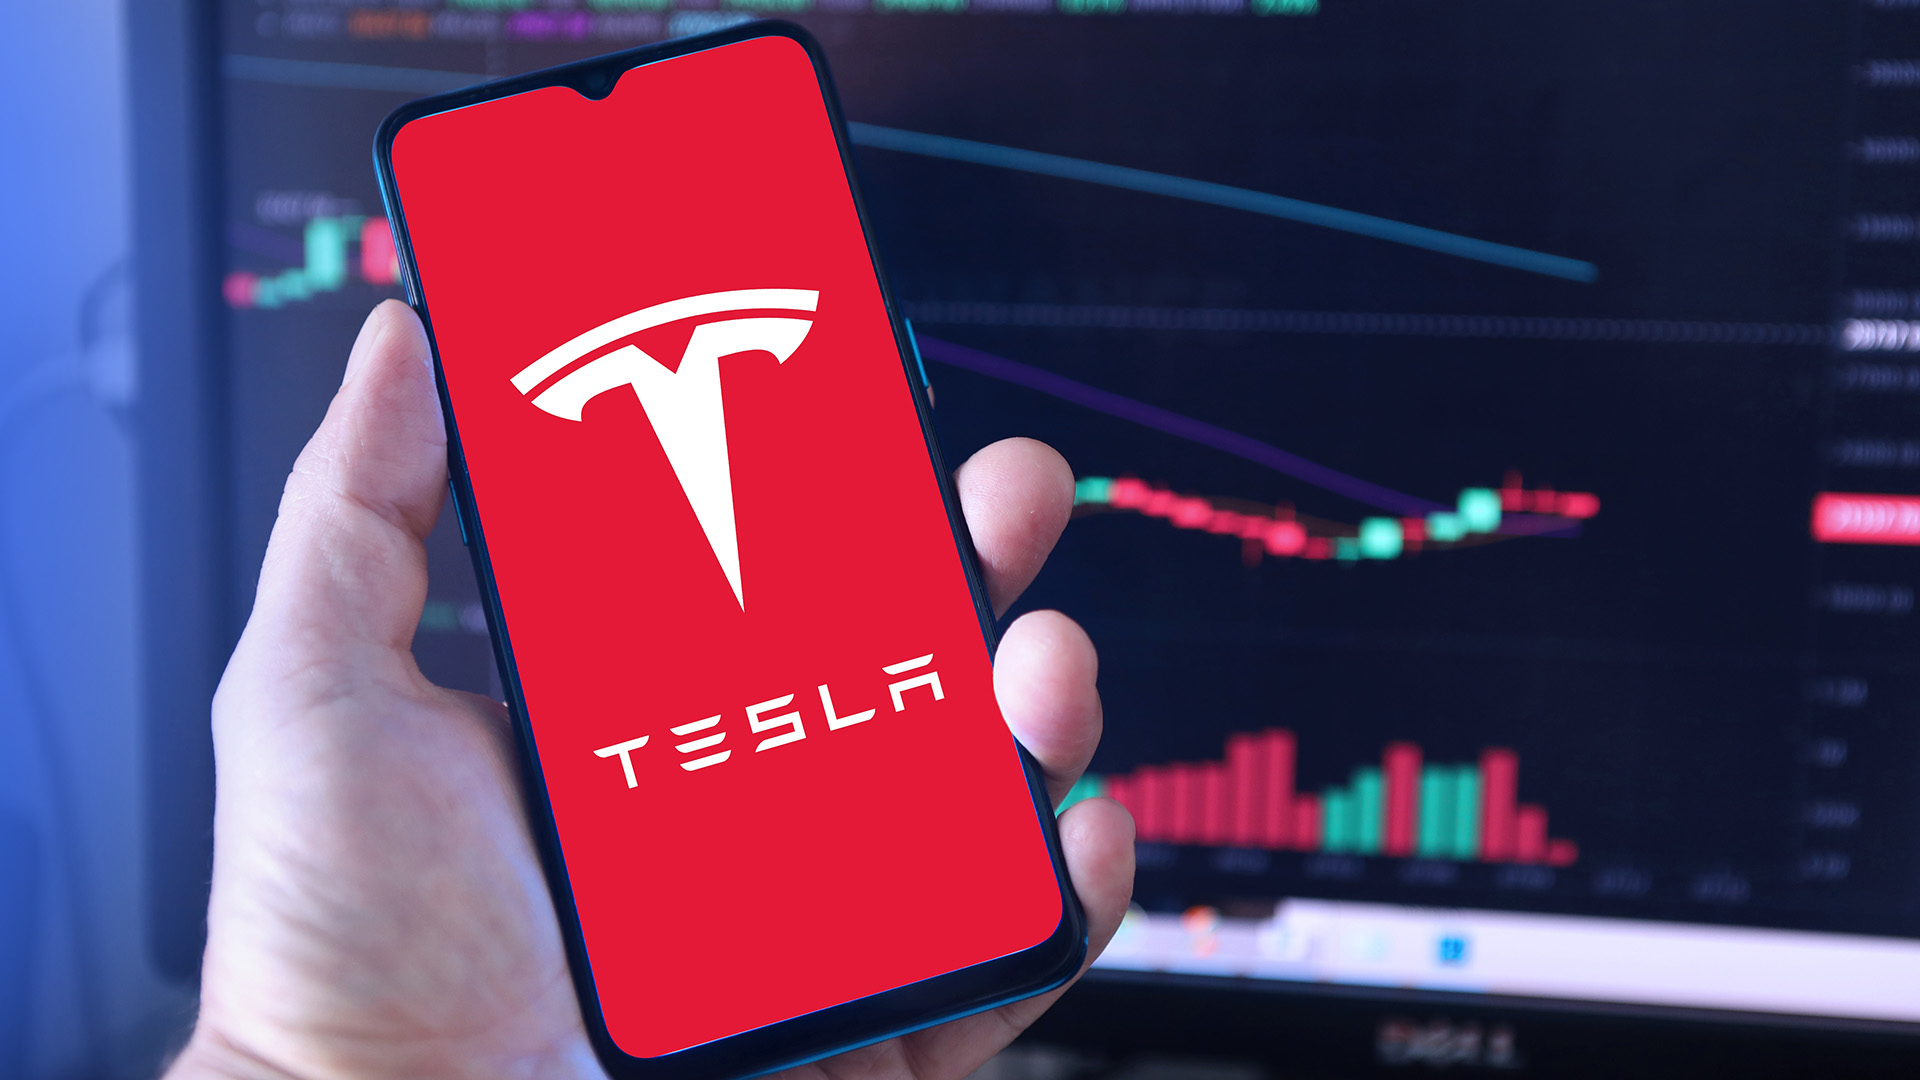 Optimism surrounding Tesla’s performance despite declining profitability